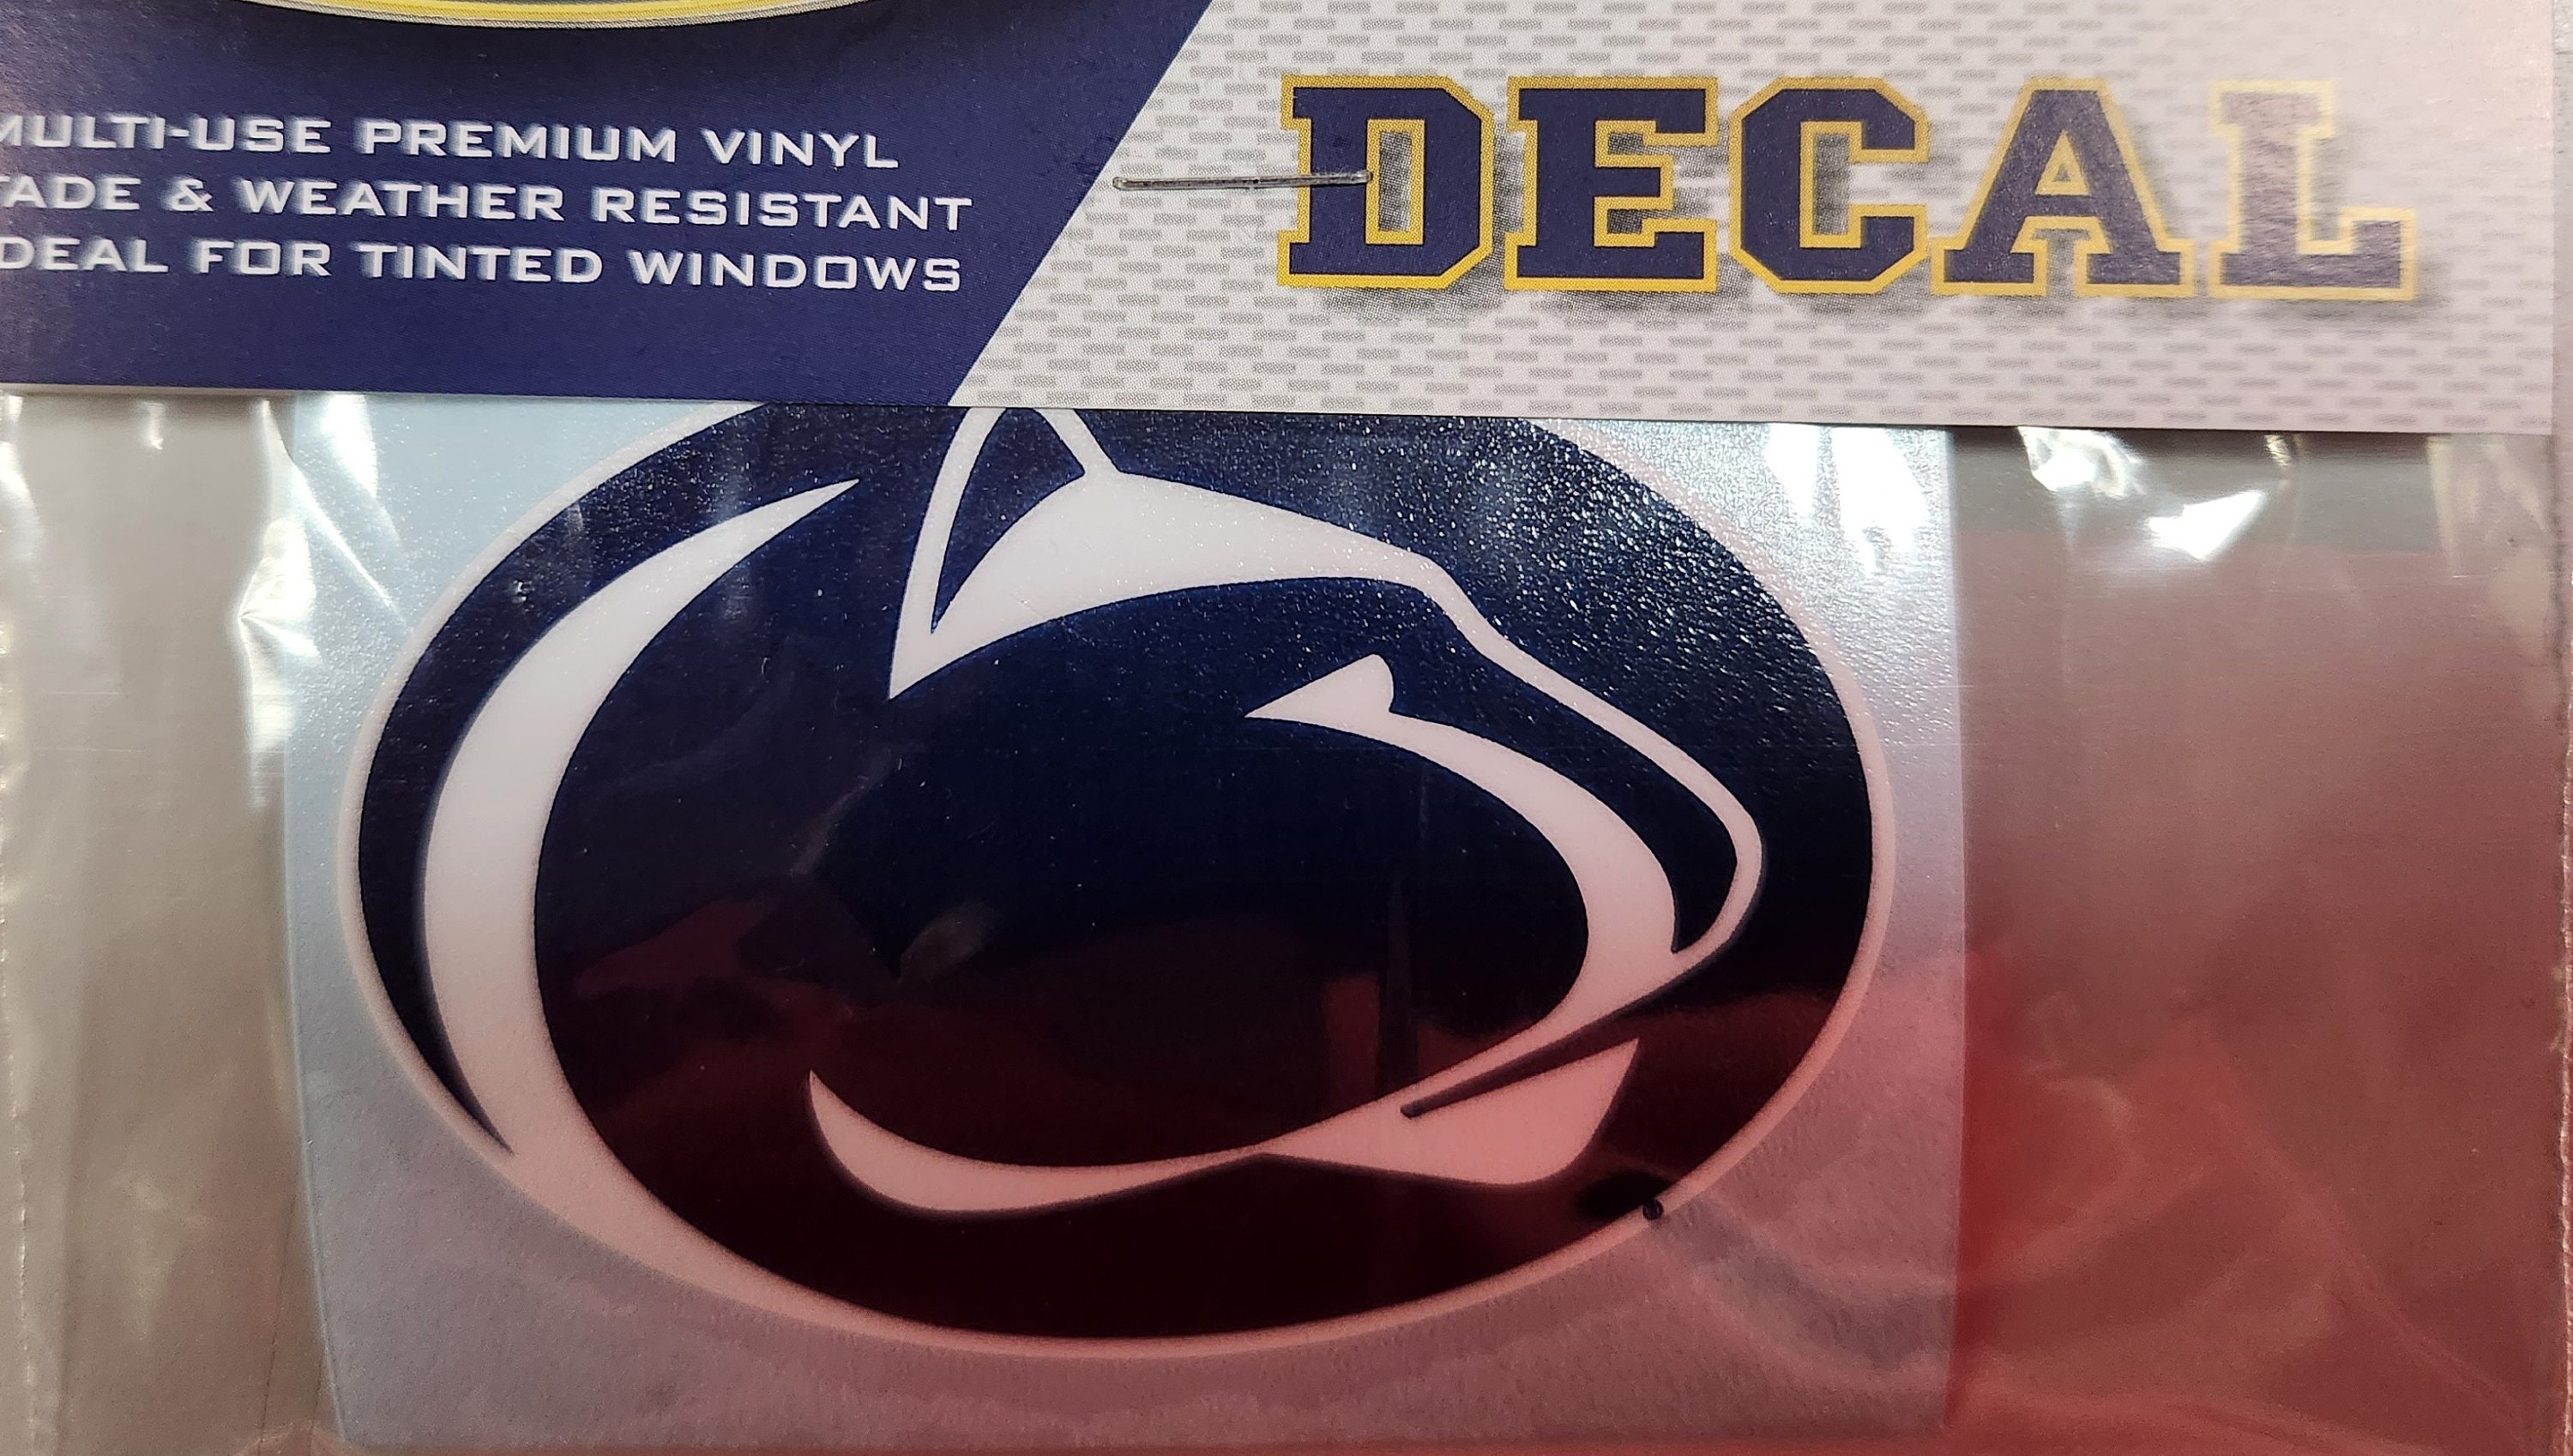 Penn State Nittany Lions (Set of 2) for Yeti Tumbler Code Blue Vinyl Decal